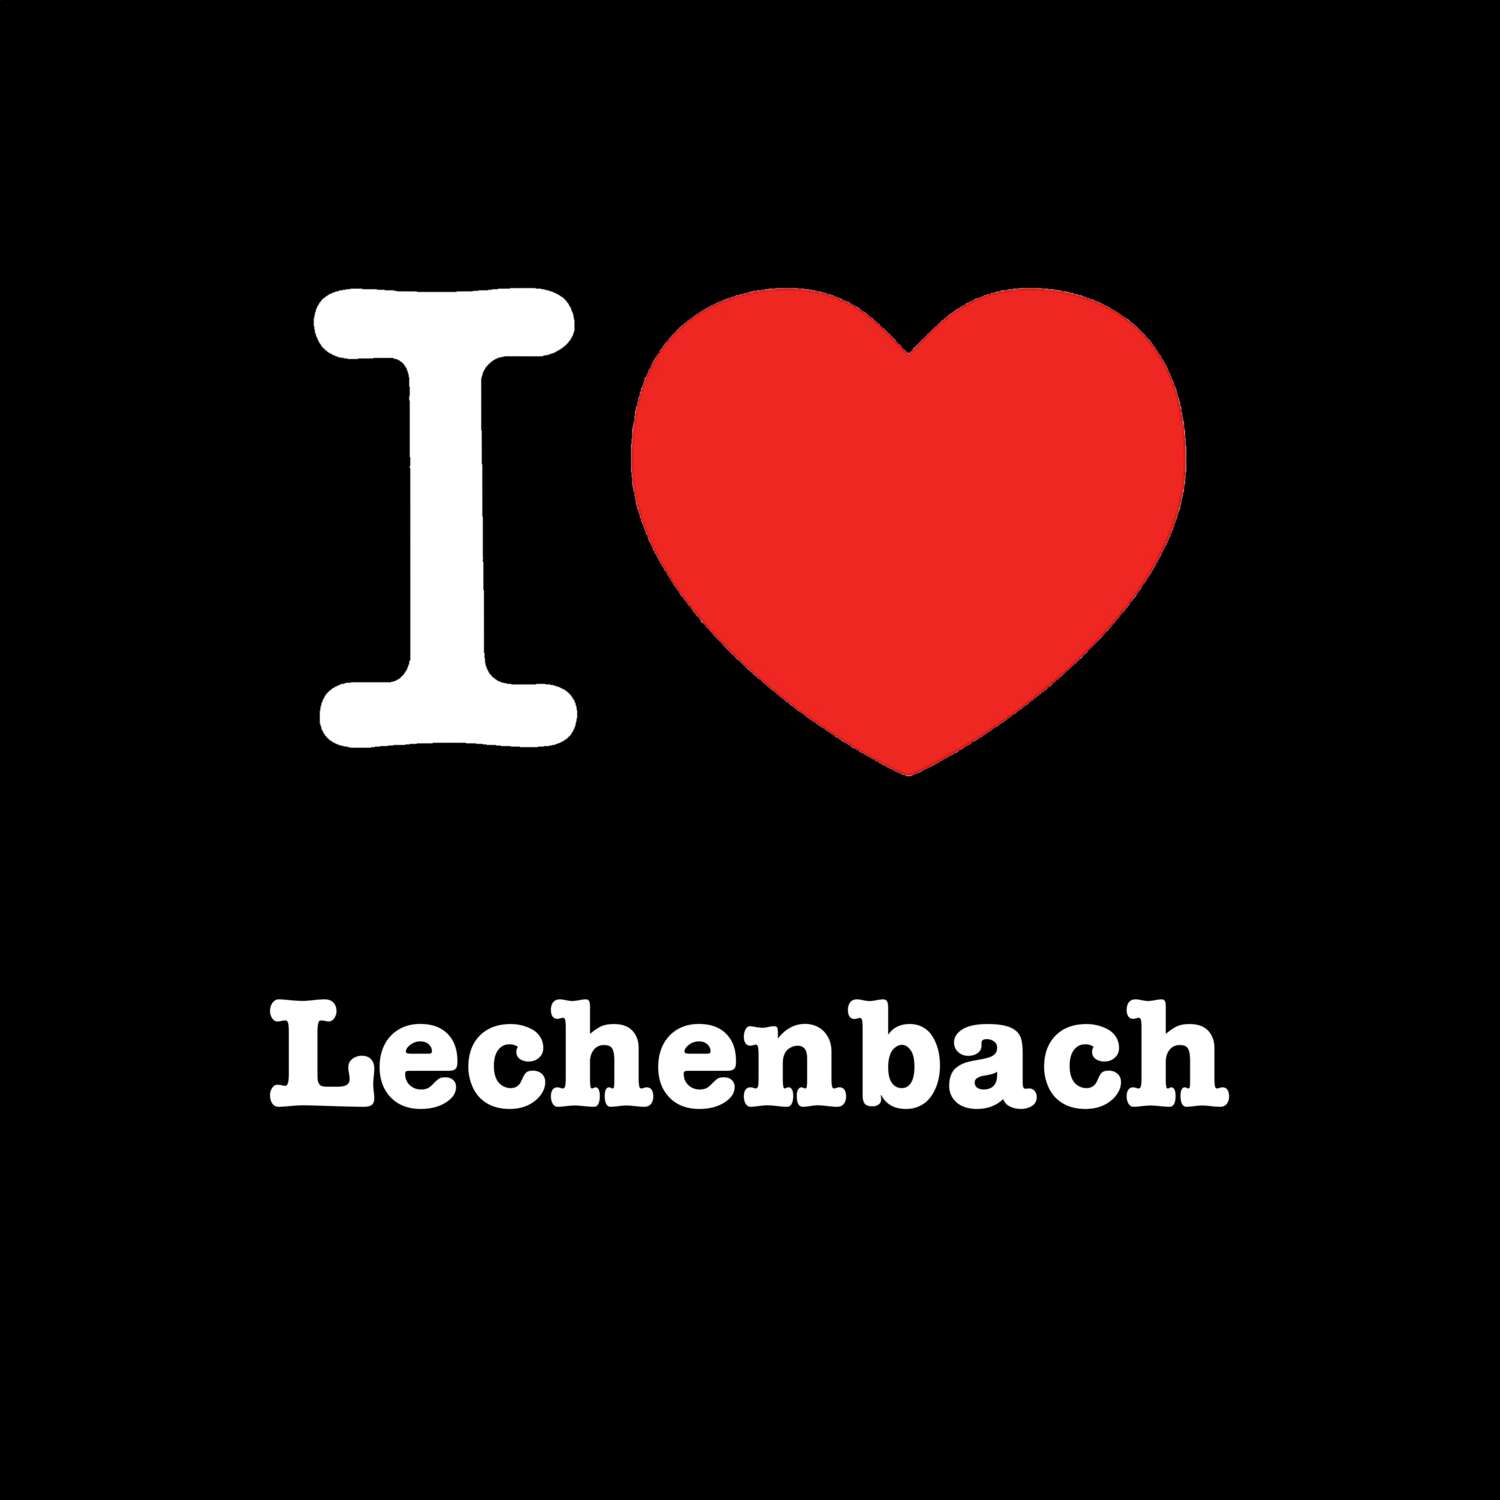 Lechenbach T-Shirt »I love«